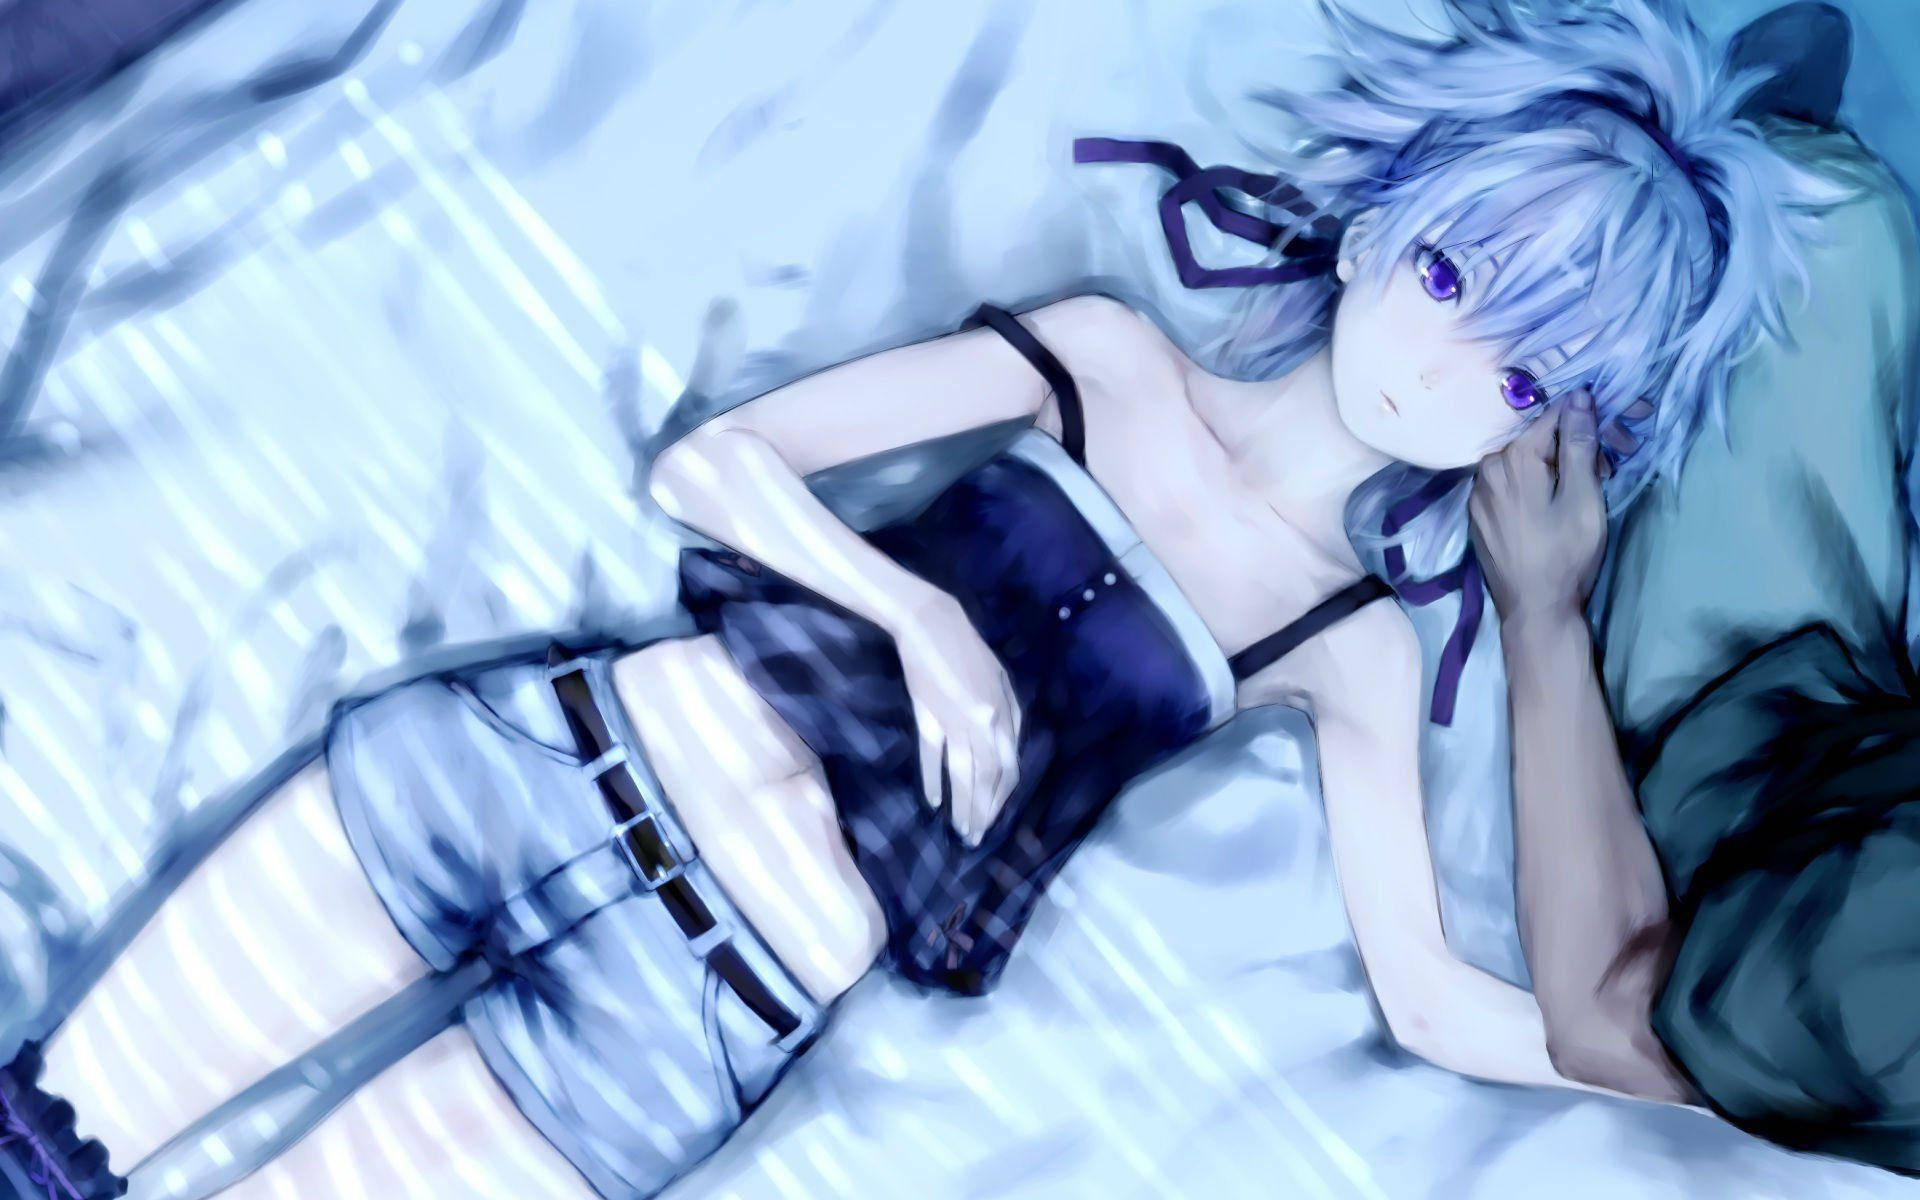 Anime Girl Lyong On Bed